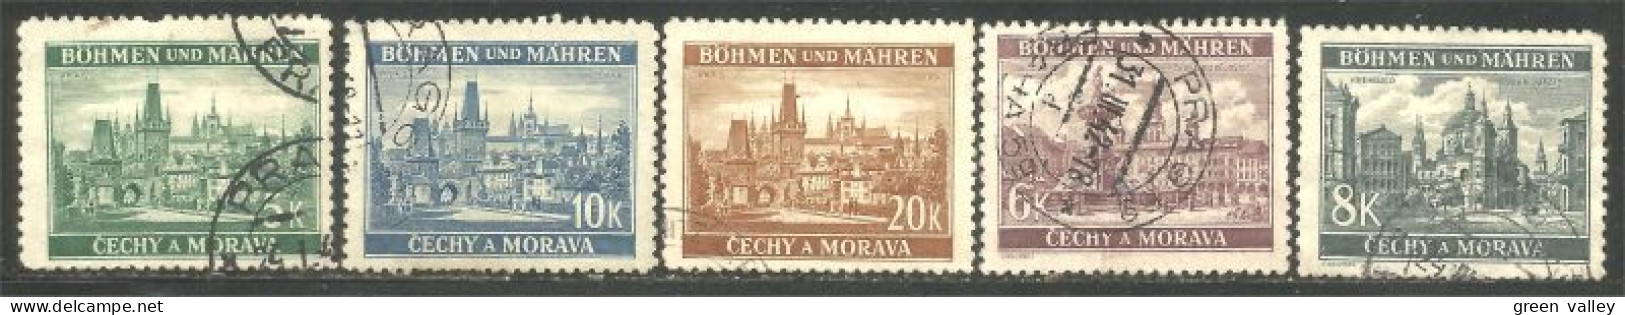 290 Bohmen Mahren Monuments 1939-40 (CZE-403) - Used Stamps